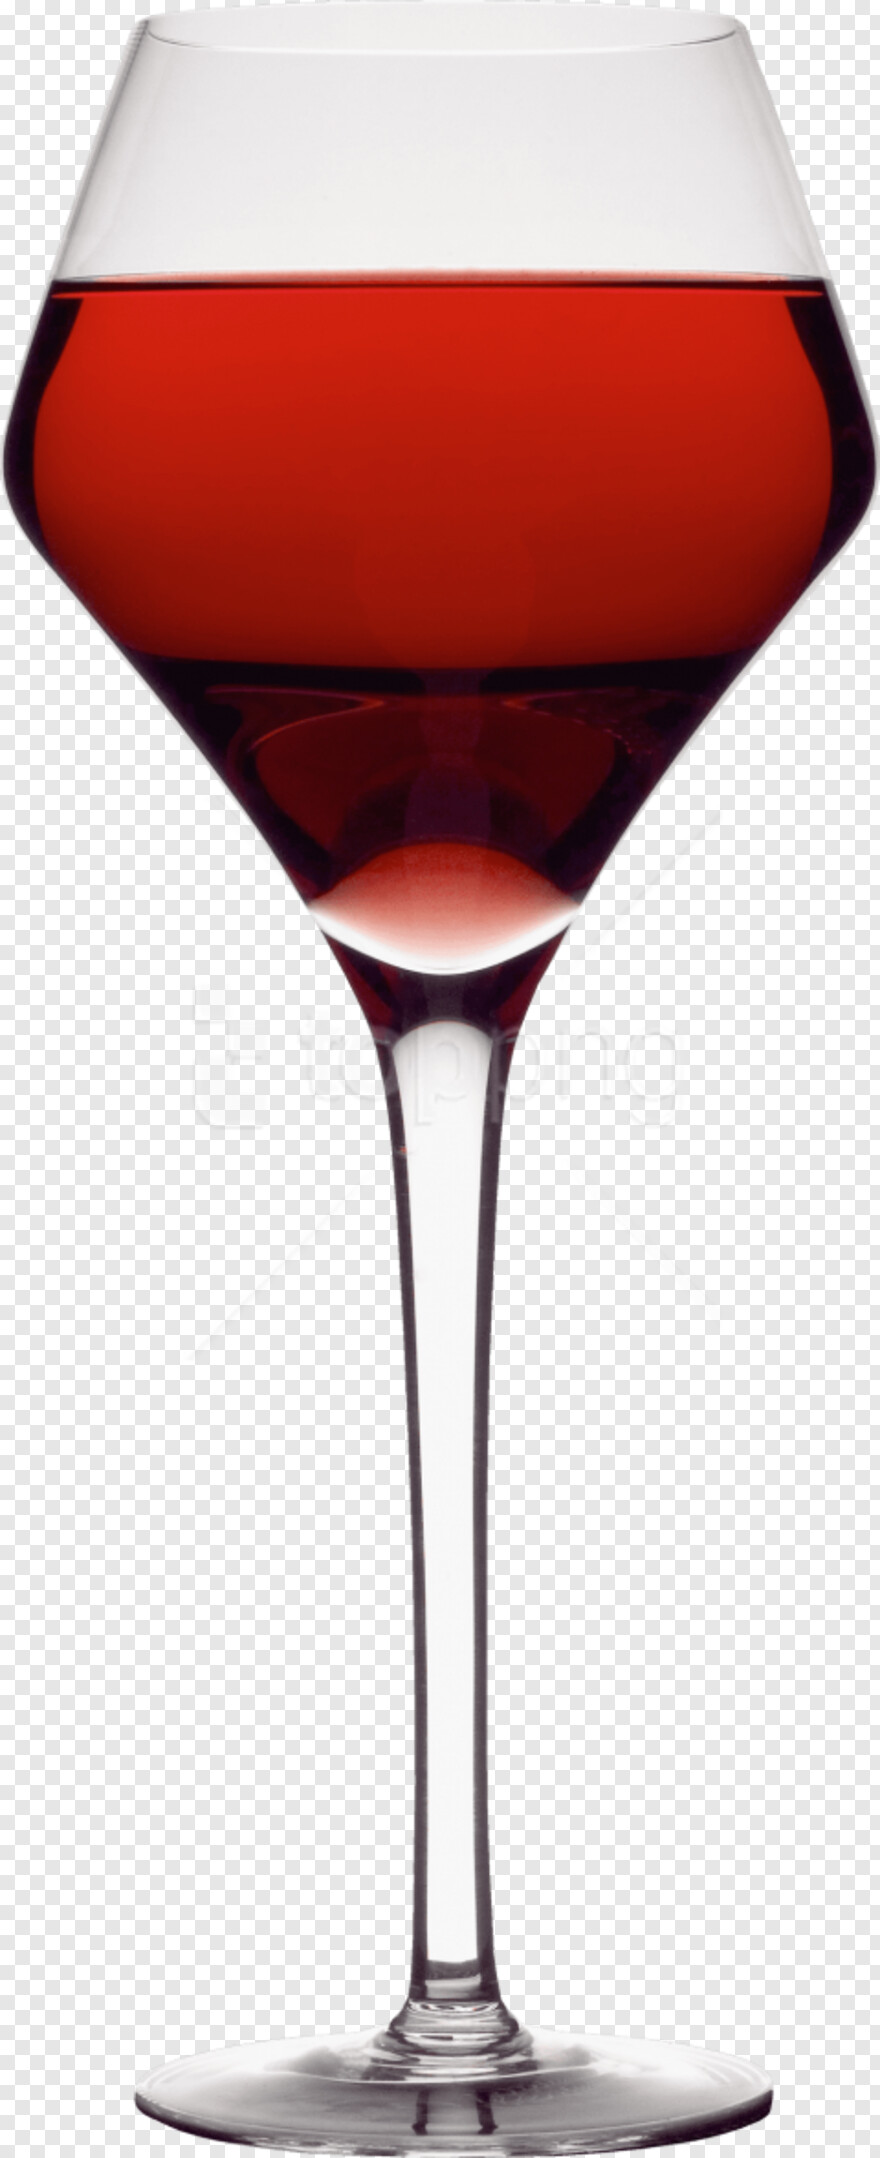 wine-glass-icon # 429866